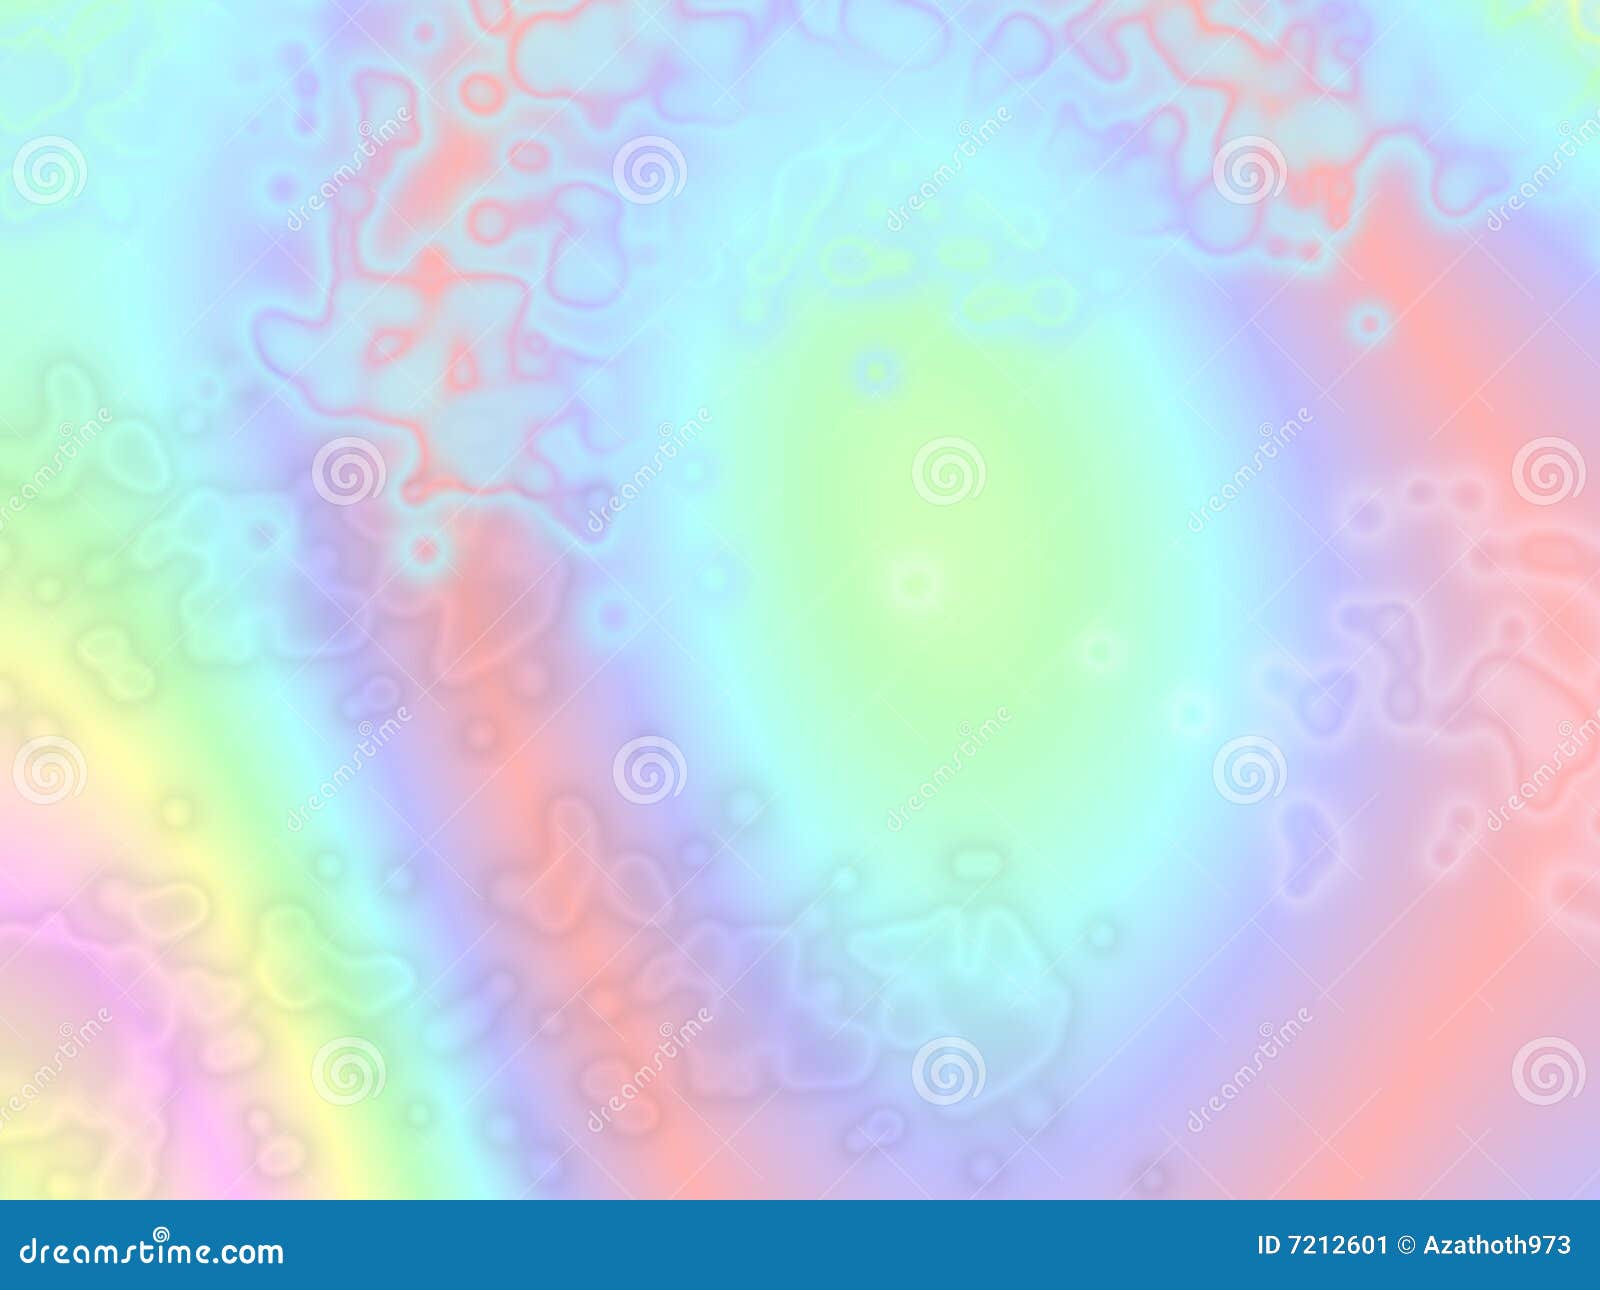 Psychedelic Pastel Ethereal Background Stock Image - Image: 7212601